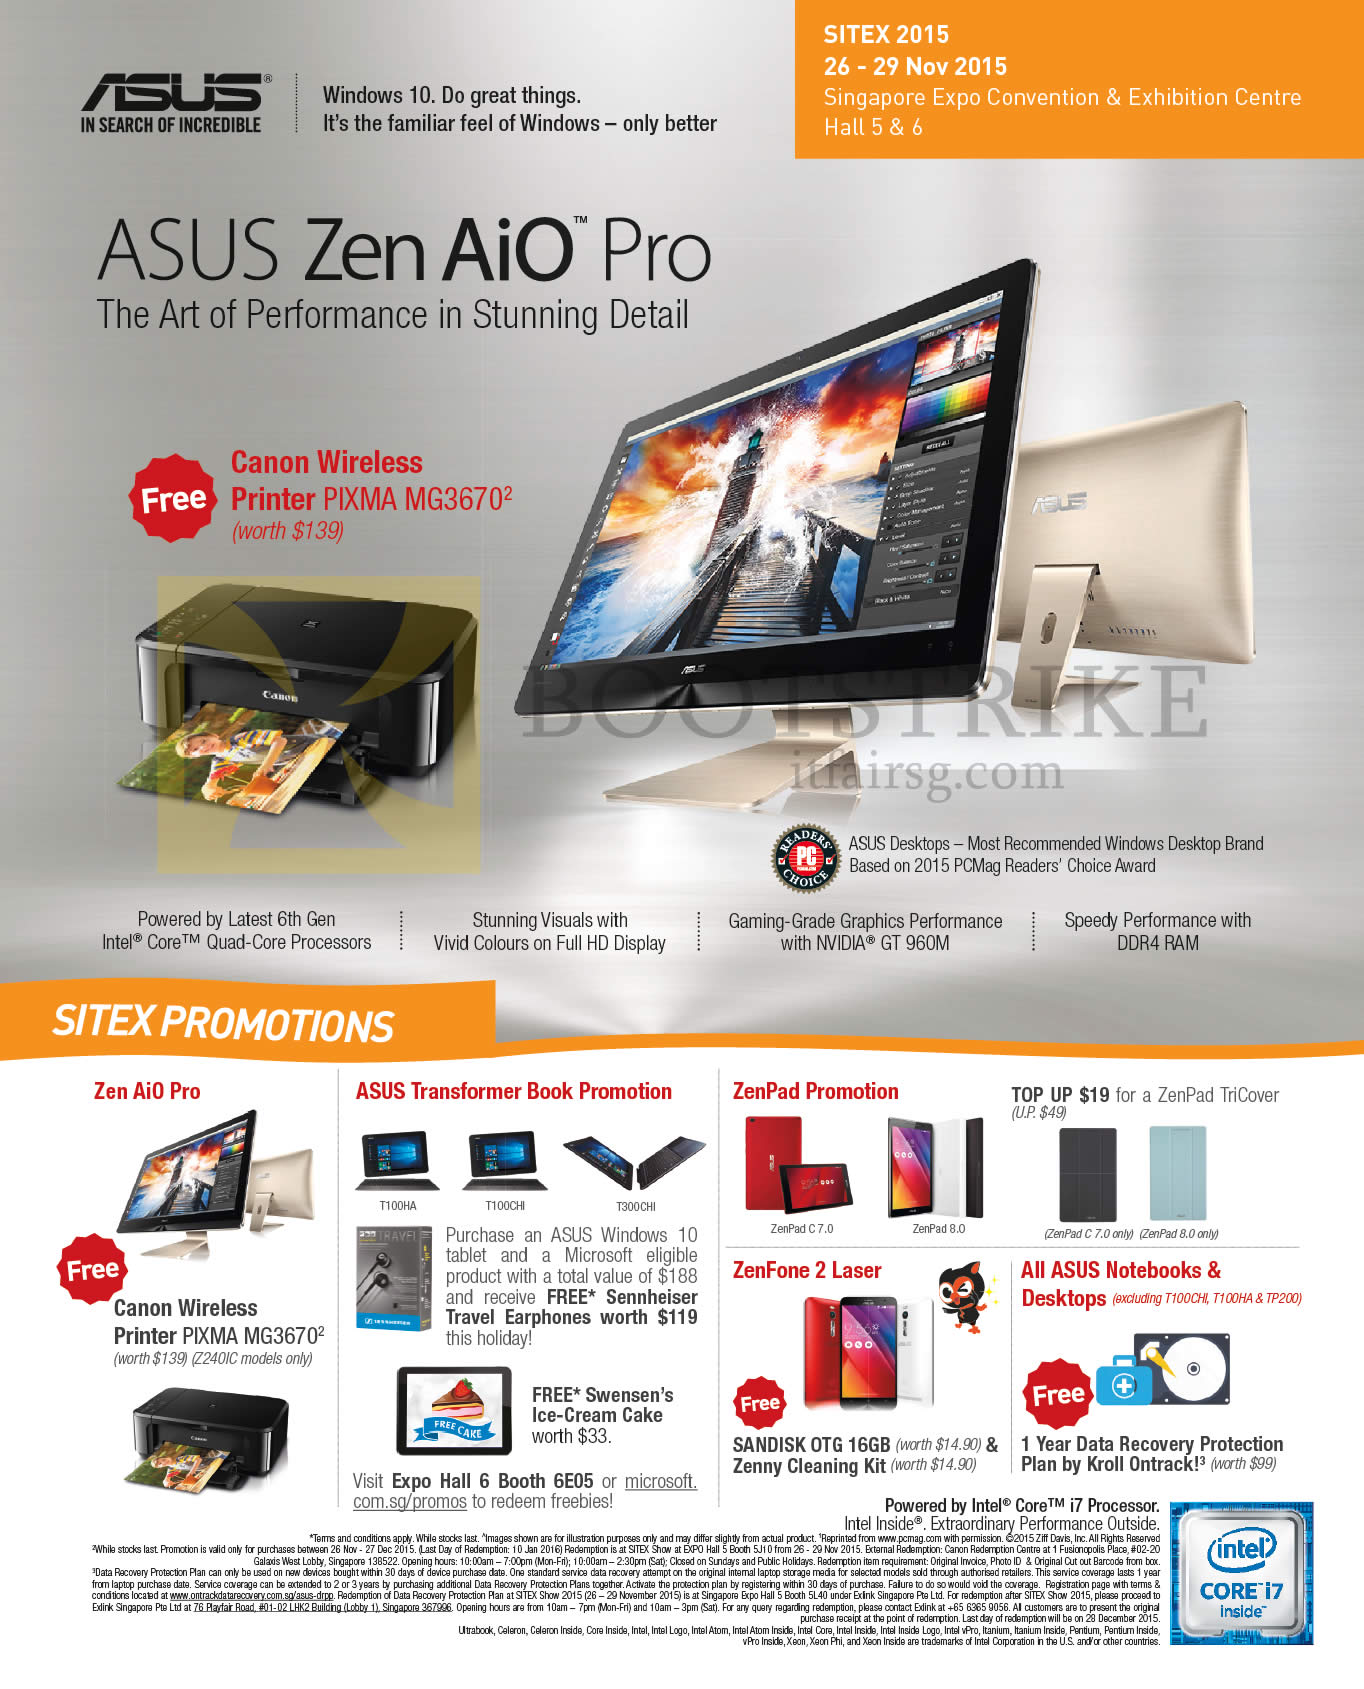 SITEX 2015 price list image brochure of ASUS Featured Zen AiO Pro, ZenPad Promotion, ZenFone 2 Laser, Zen AiO Pro, Canon Wireless Printer PIXMA MG3670